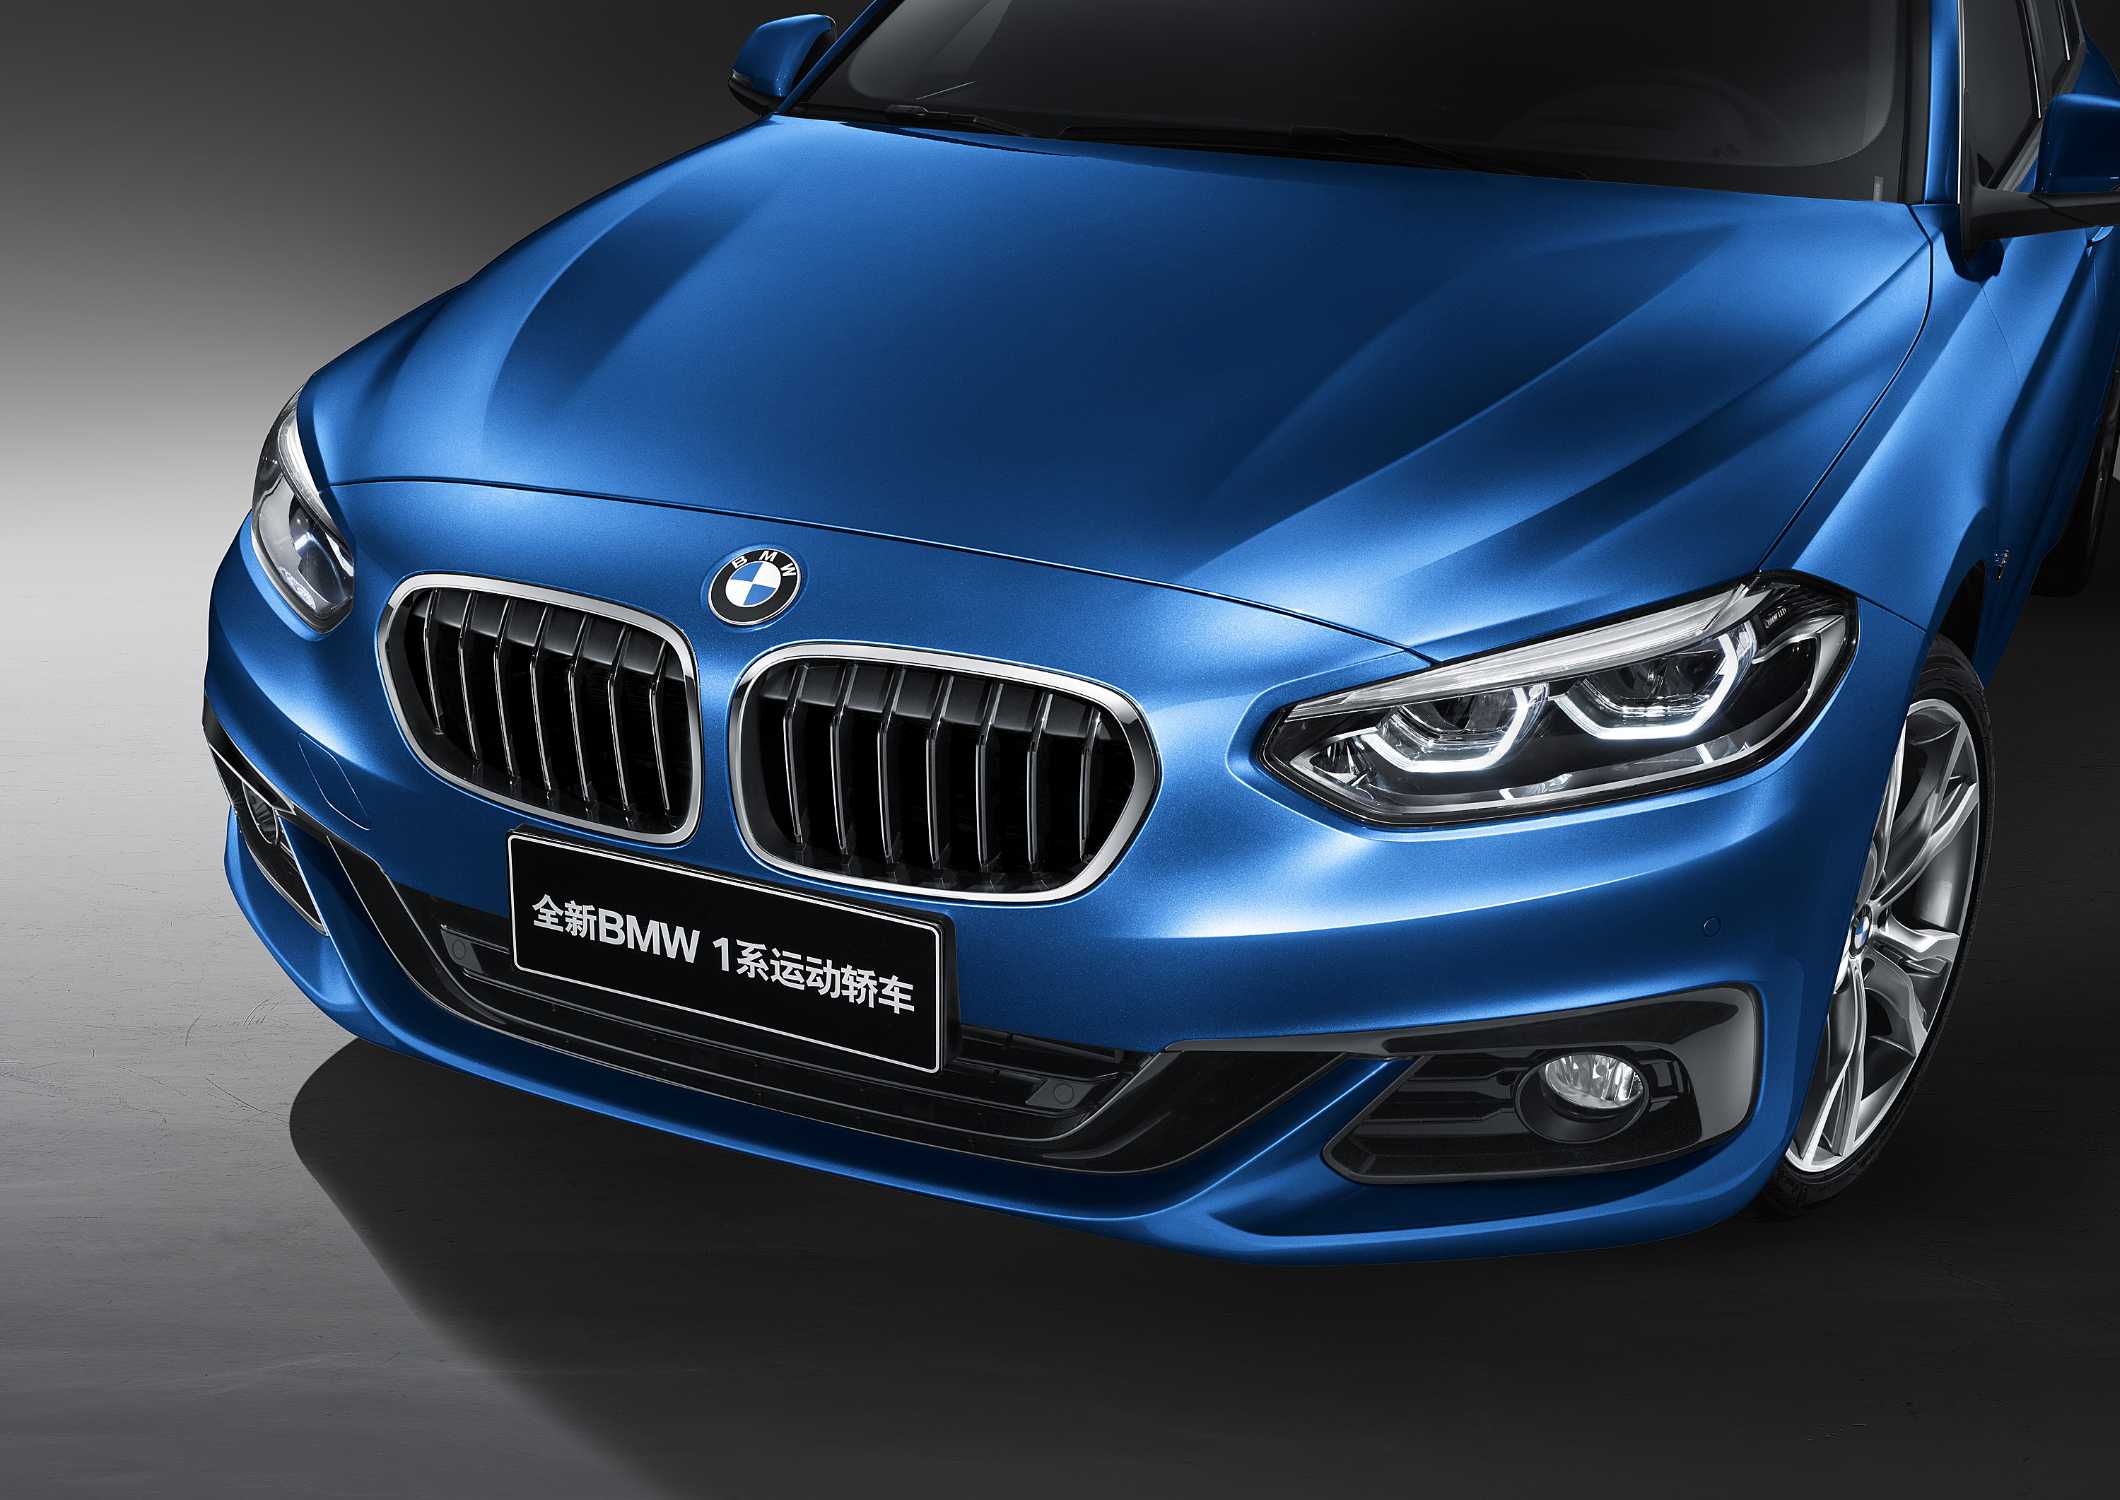 BMW 1 Series Sedan sporty, highly emotional model